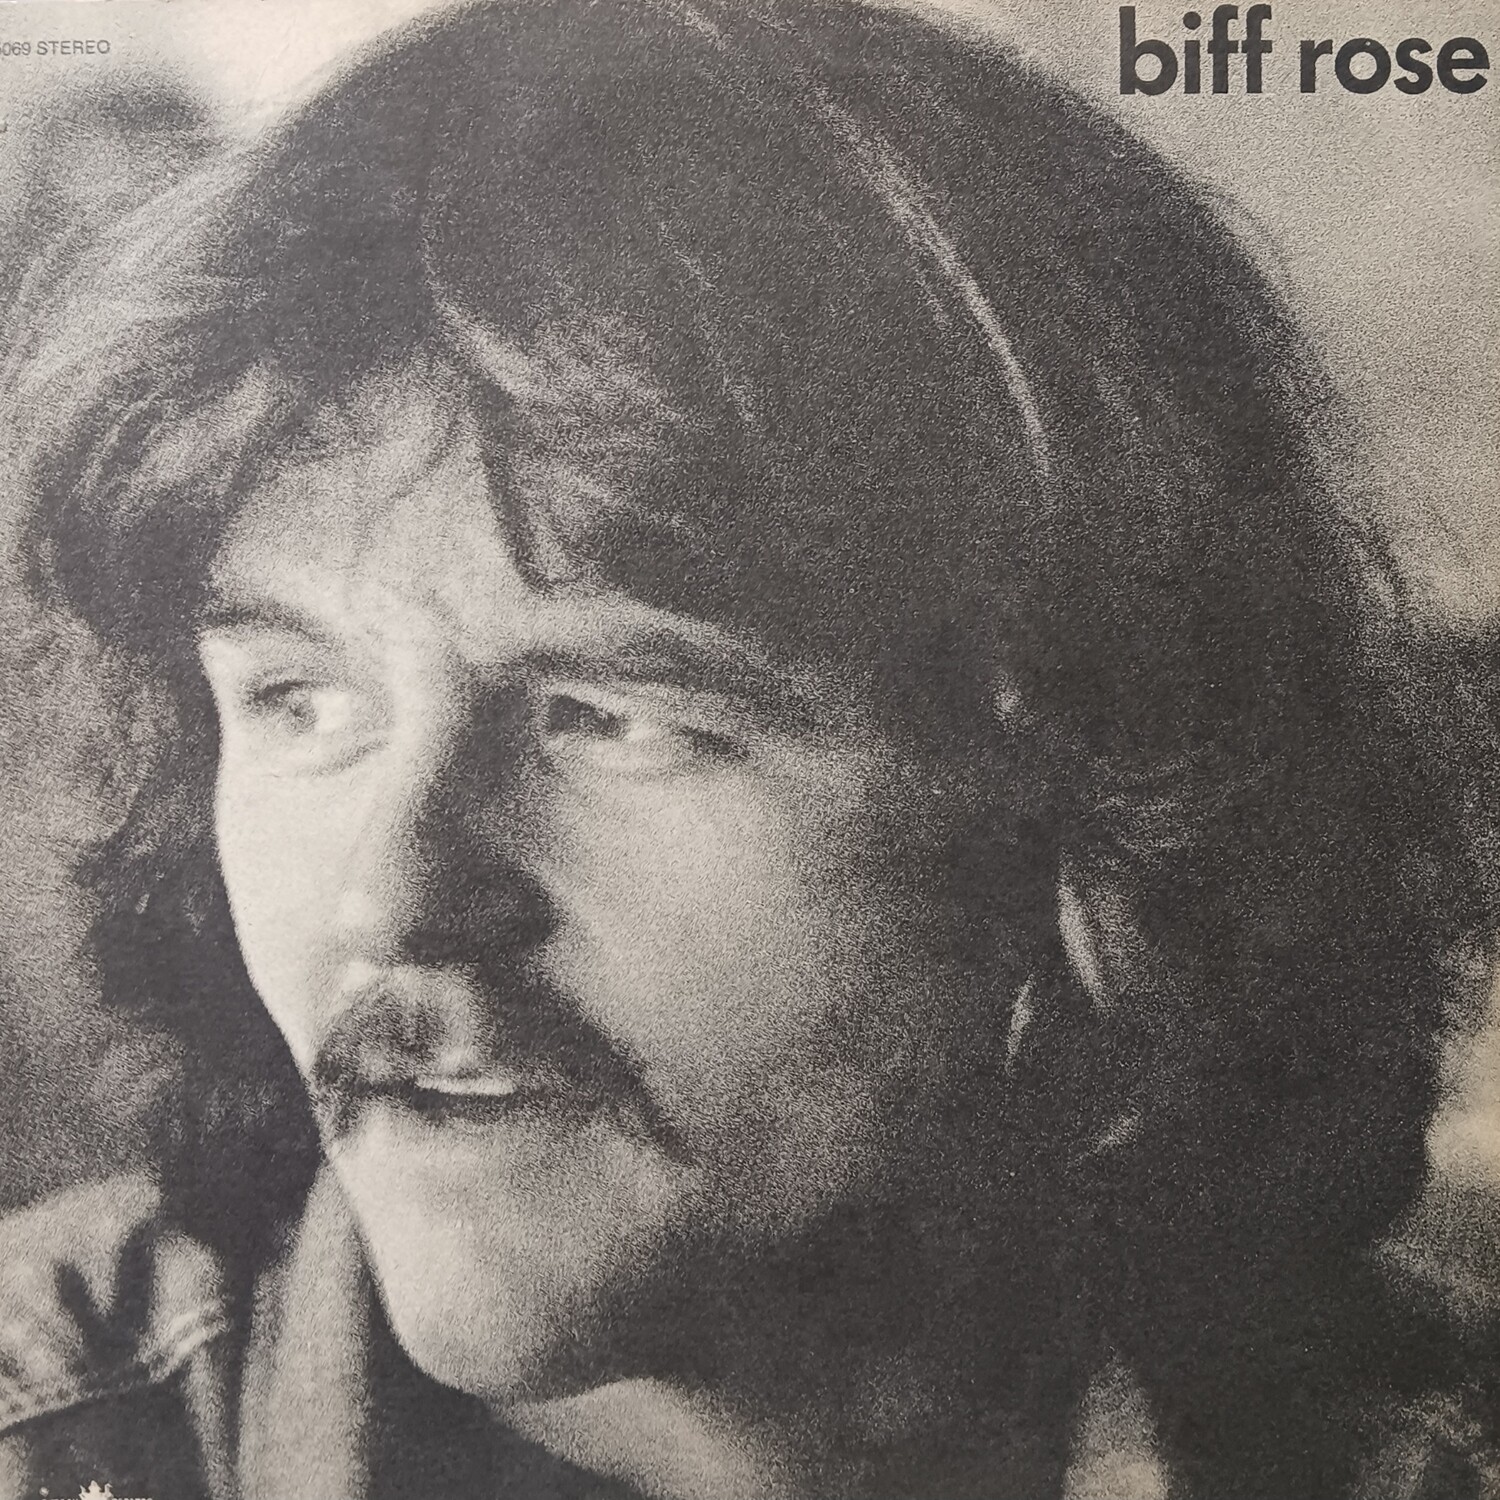 BIFF ROSE - Biff Rose